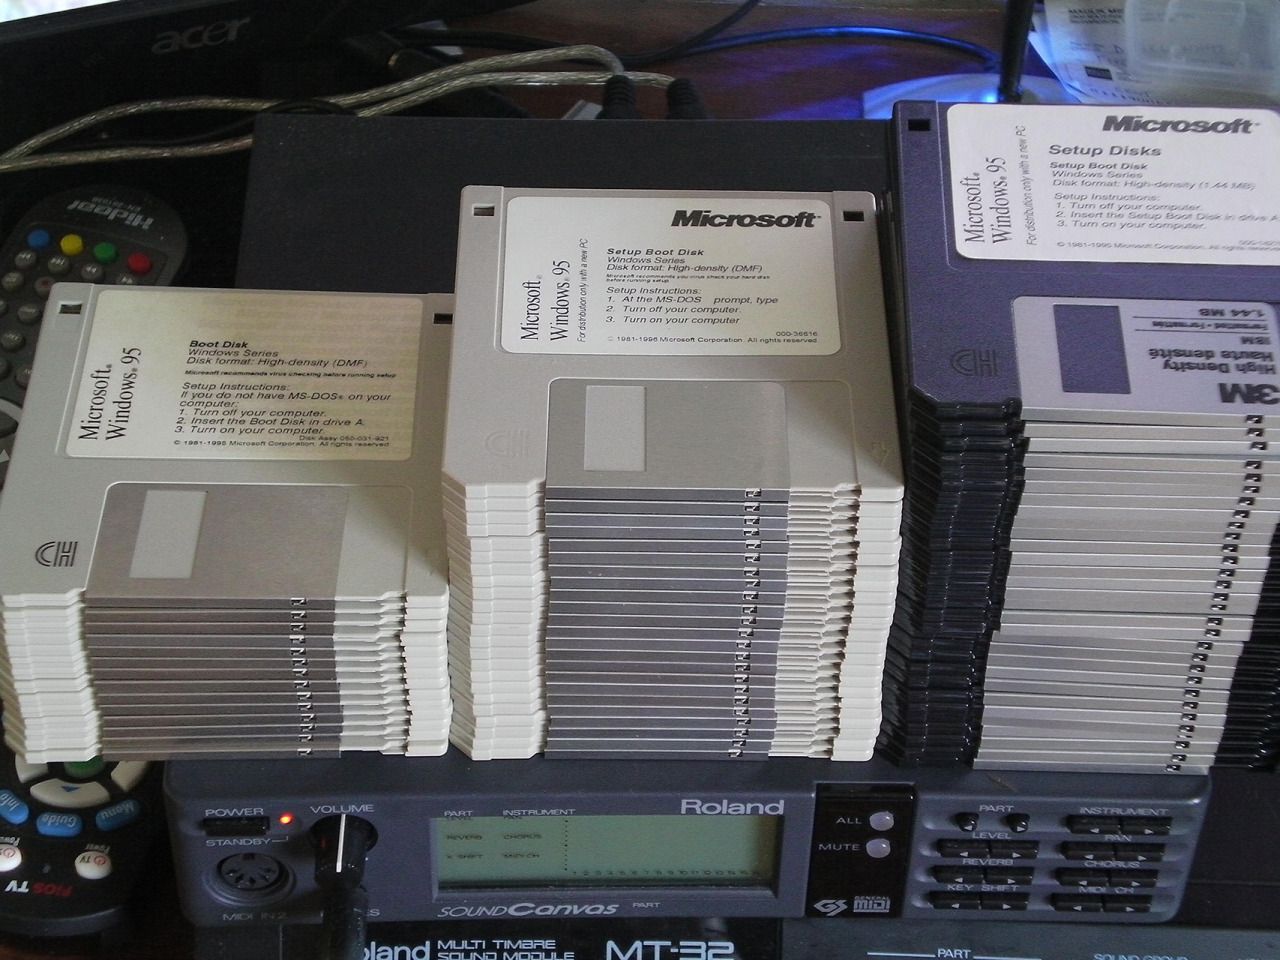 Windows 95 floppy disk